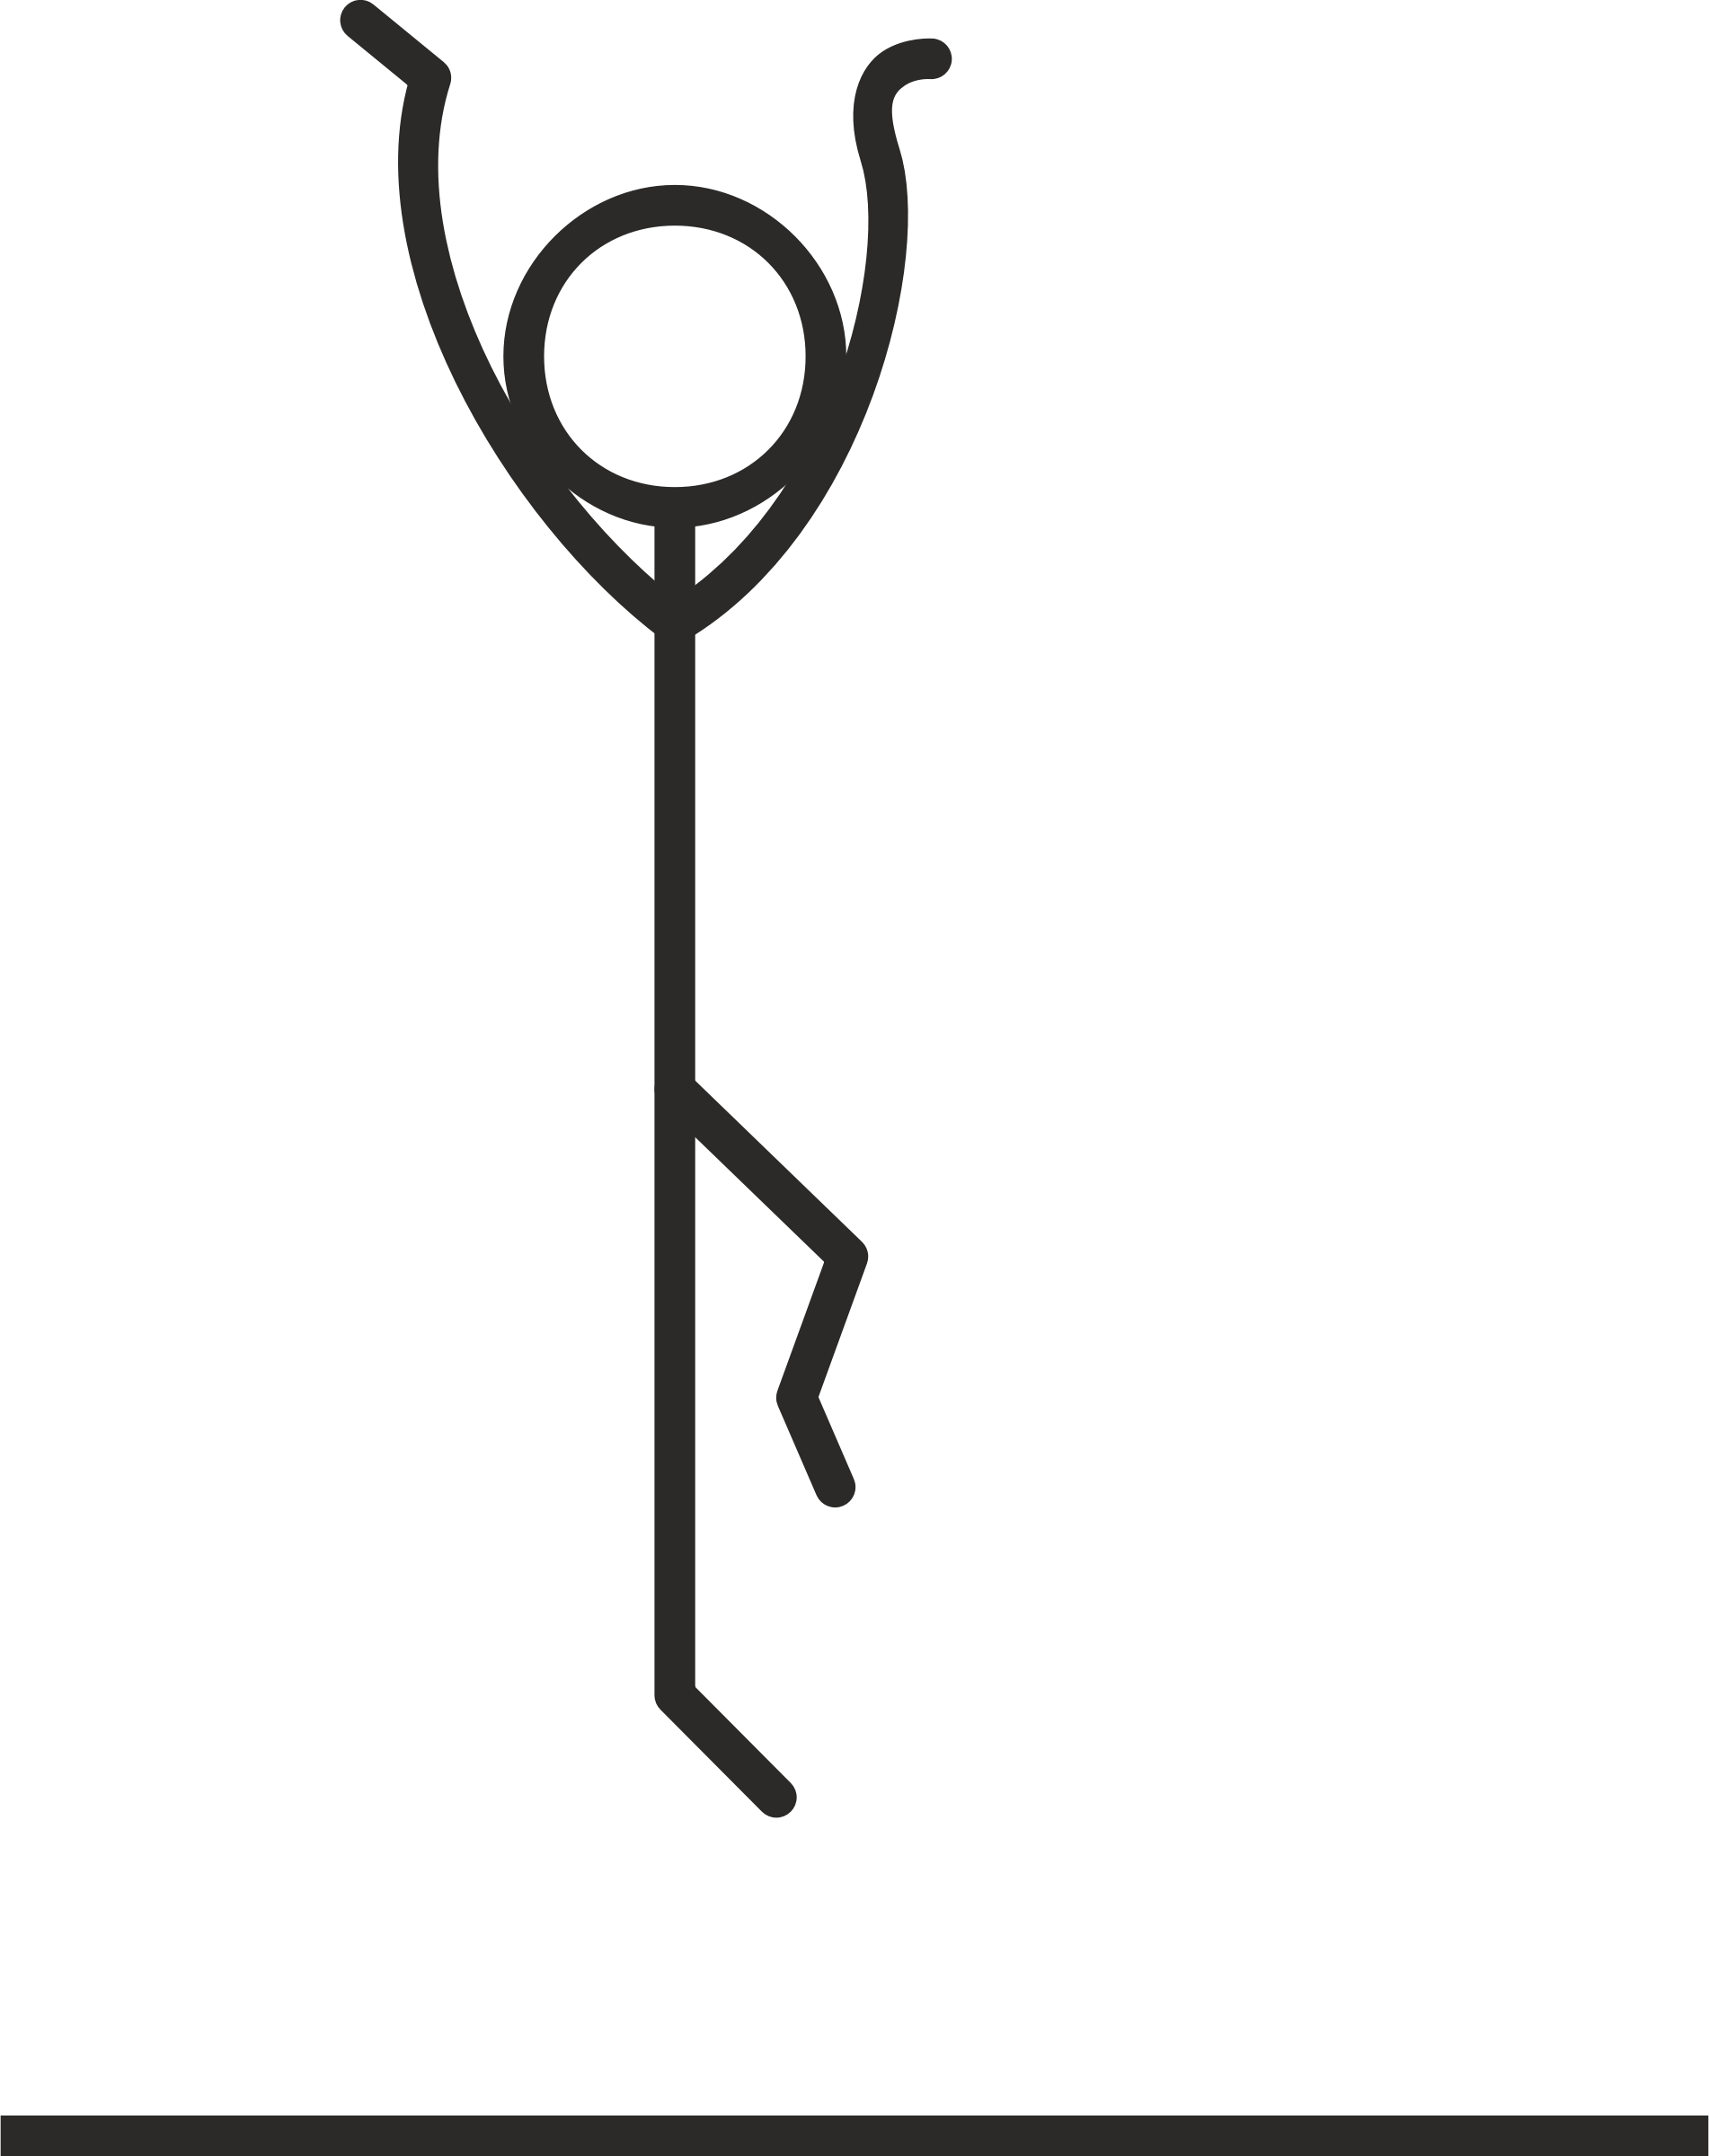 Clipart - Stick figure jumping